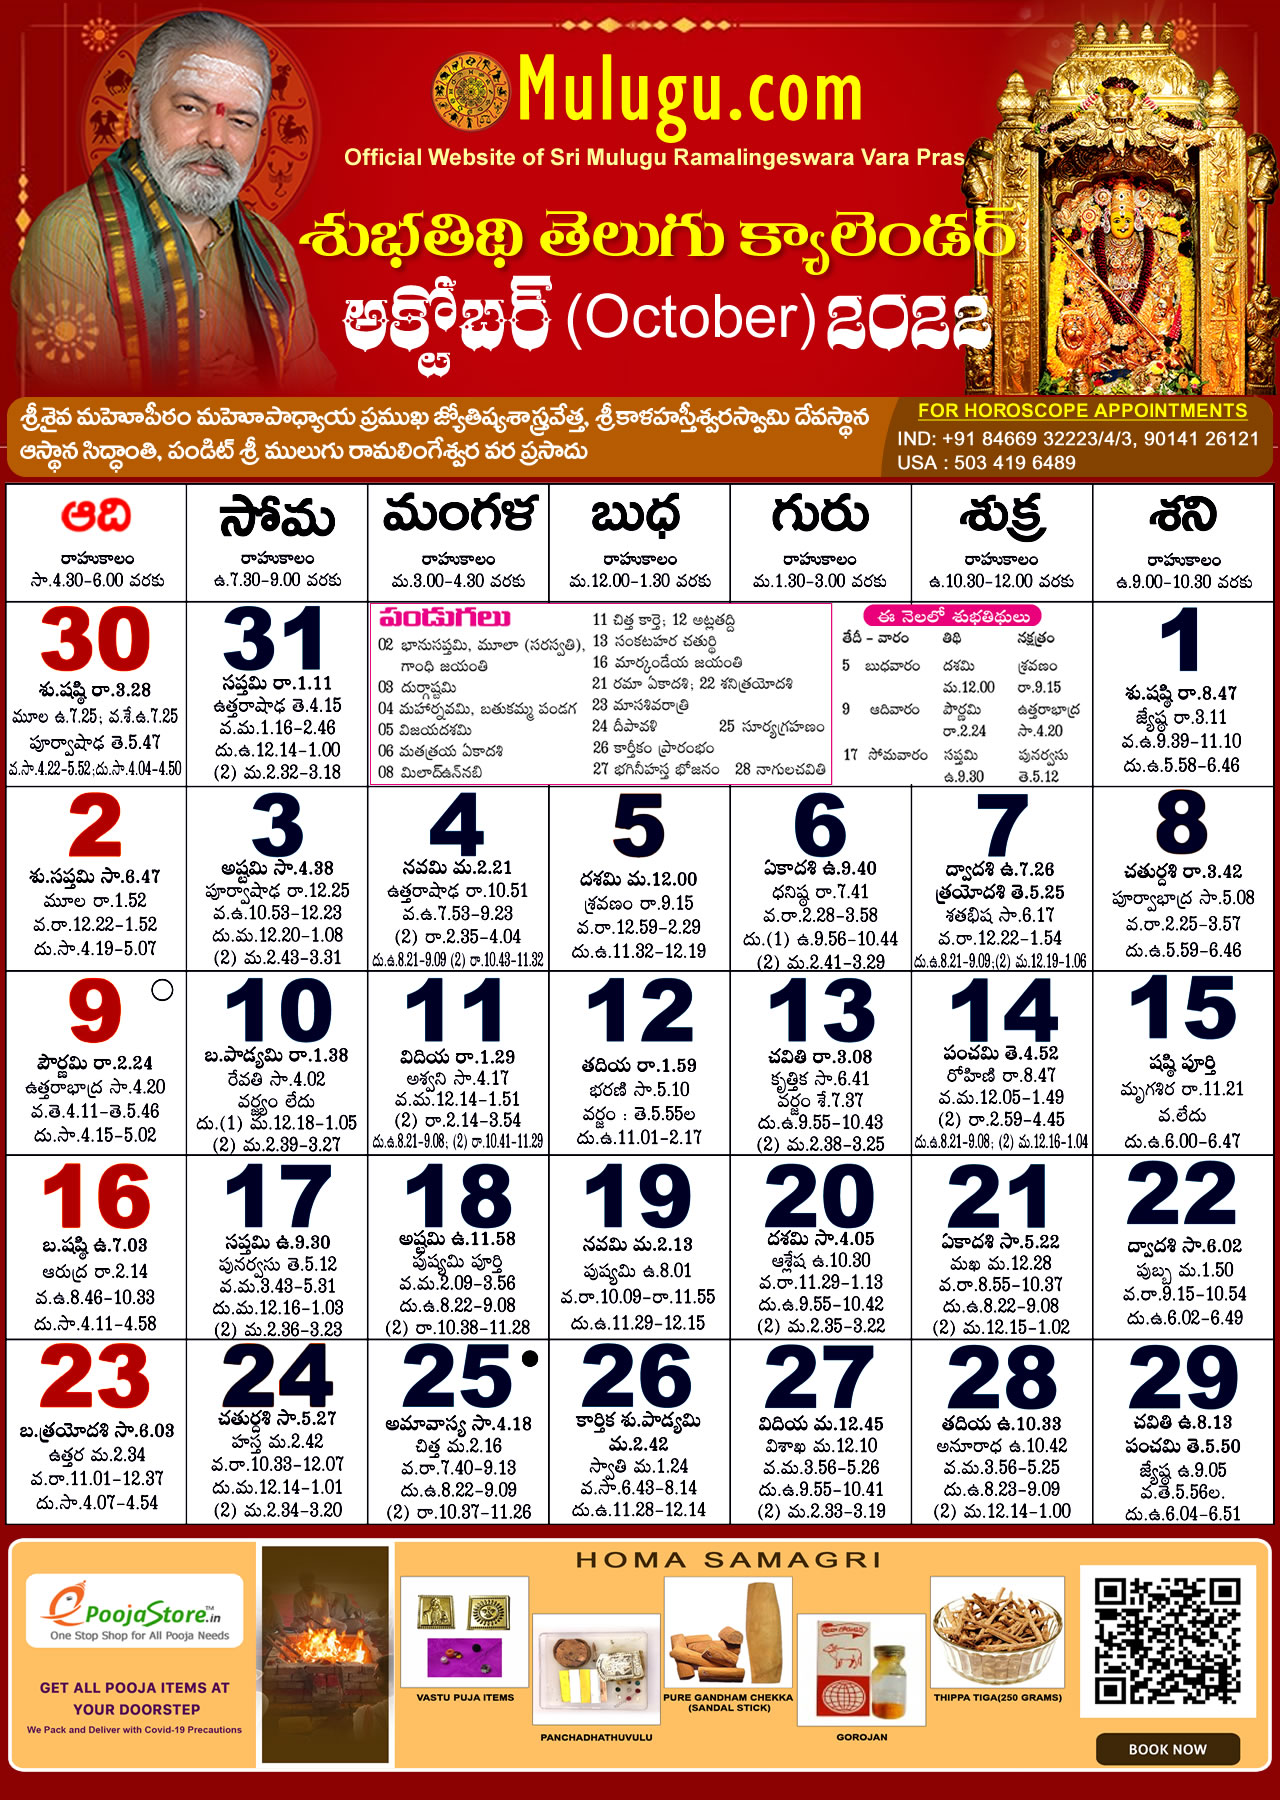 October 2022 Telugu Calendar Subhathidi October Telugu Calendar 2022 | Telugu Calendar 2022 - 2023 |  Telugu Subhathidi Calendar 2022 | Calendar 2022 | Telugu Calendar 2022 |  Subhathidi Calendar 2022 | Chicago Calendar 2022 |